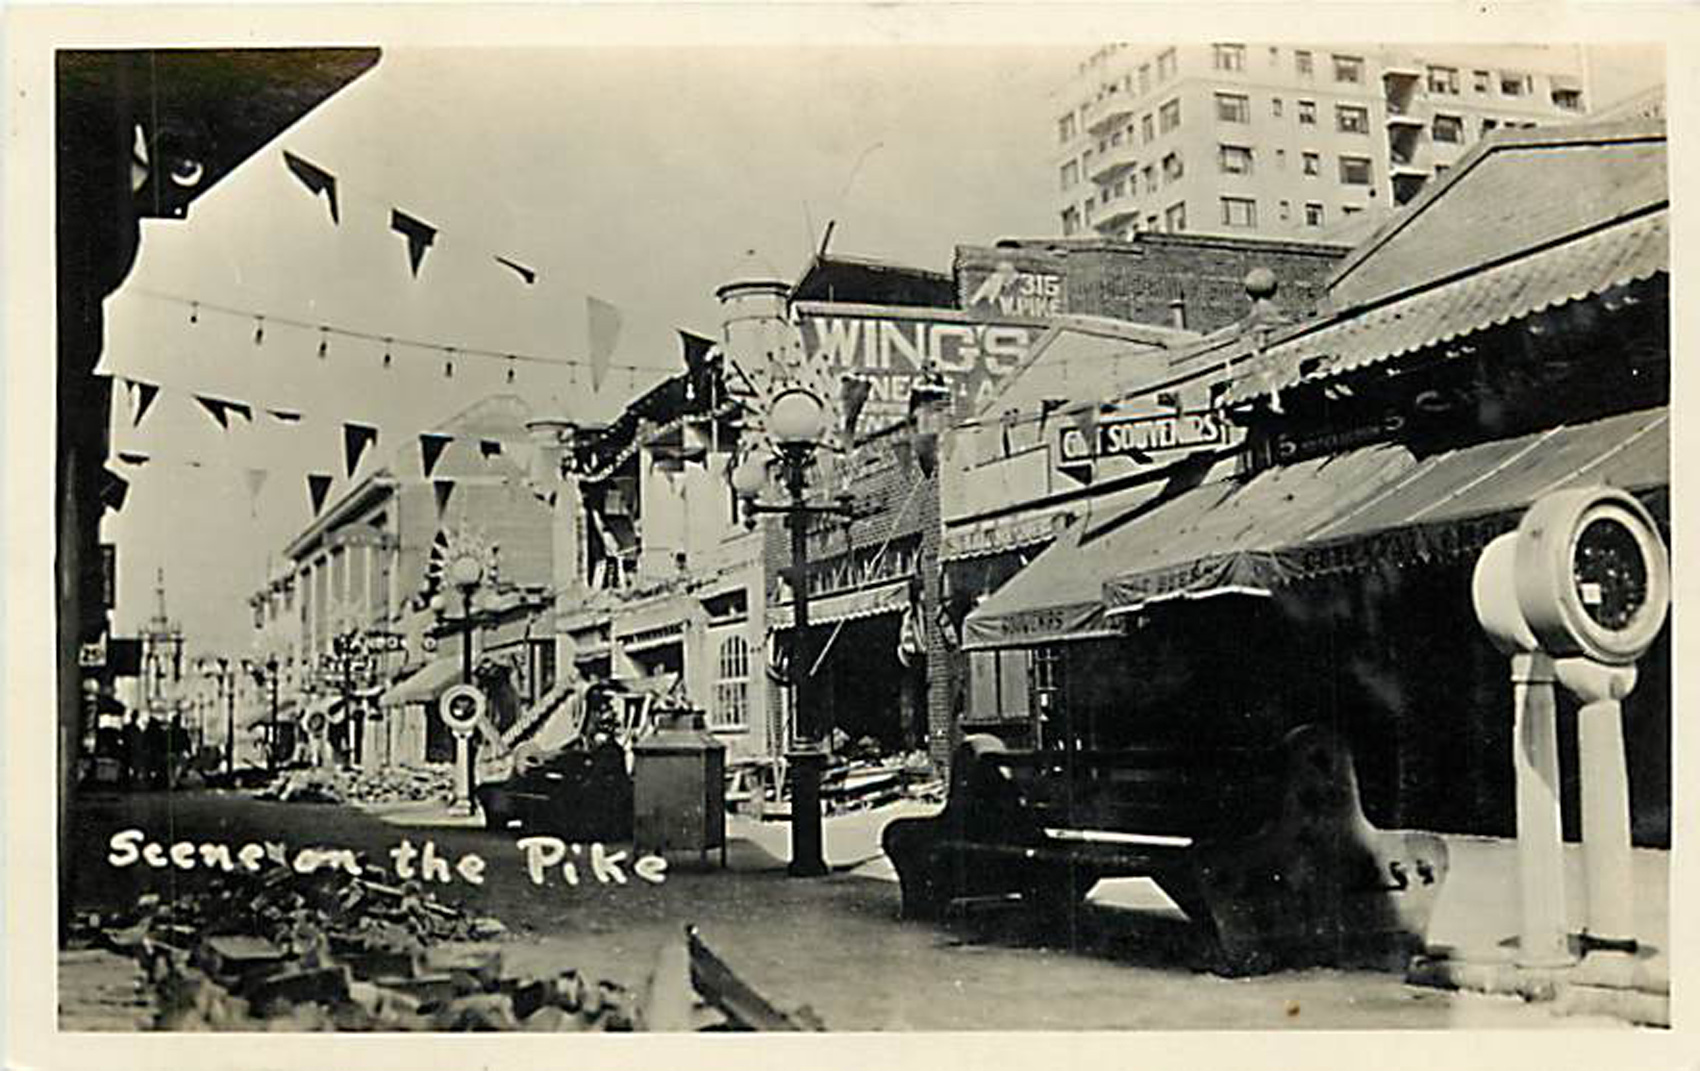 Atlantic City - A scene on the Pike - 1910s-20s